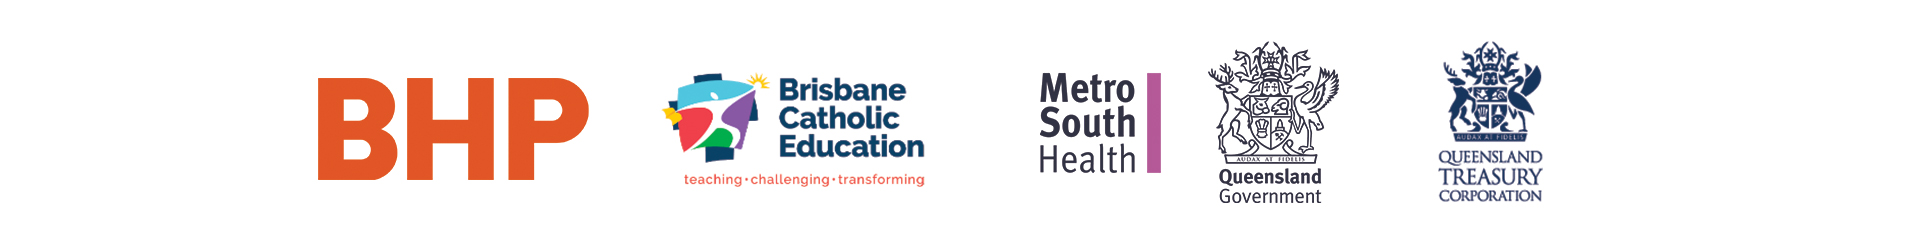 Recent bespoke clients - BHP, Brisbane Catholic Education, Metro South Health, Queensland Treasury Corporation